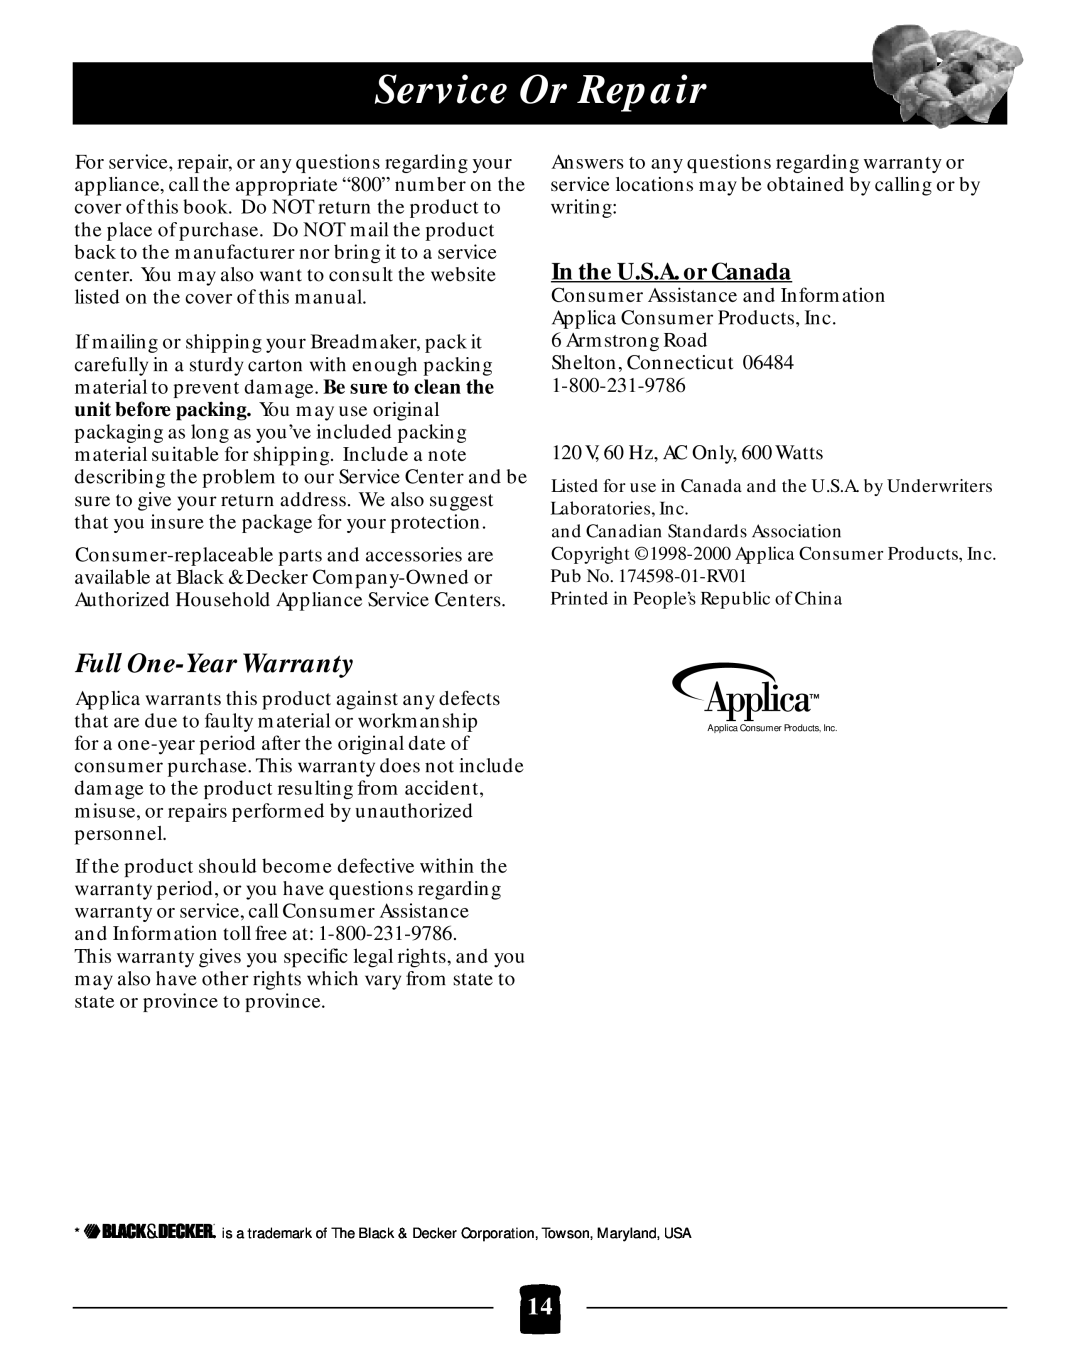 Black & Decker B2005 manual Service Or Repair, Full One-Year Warranty, In the U.S.A. or Canada 